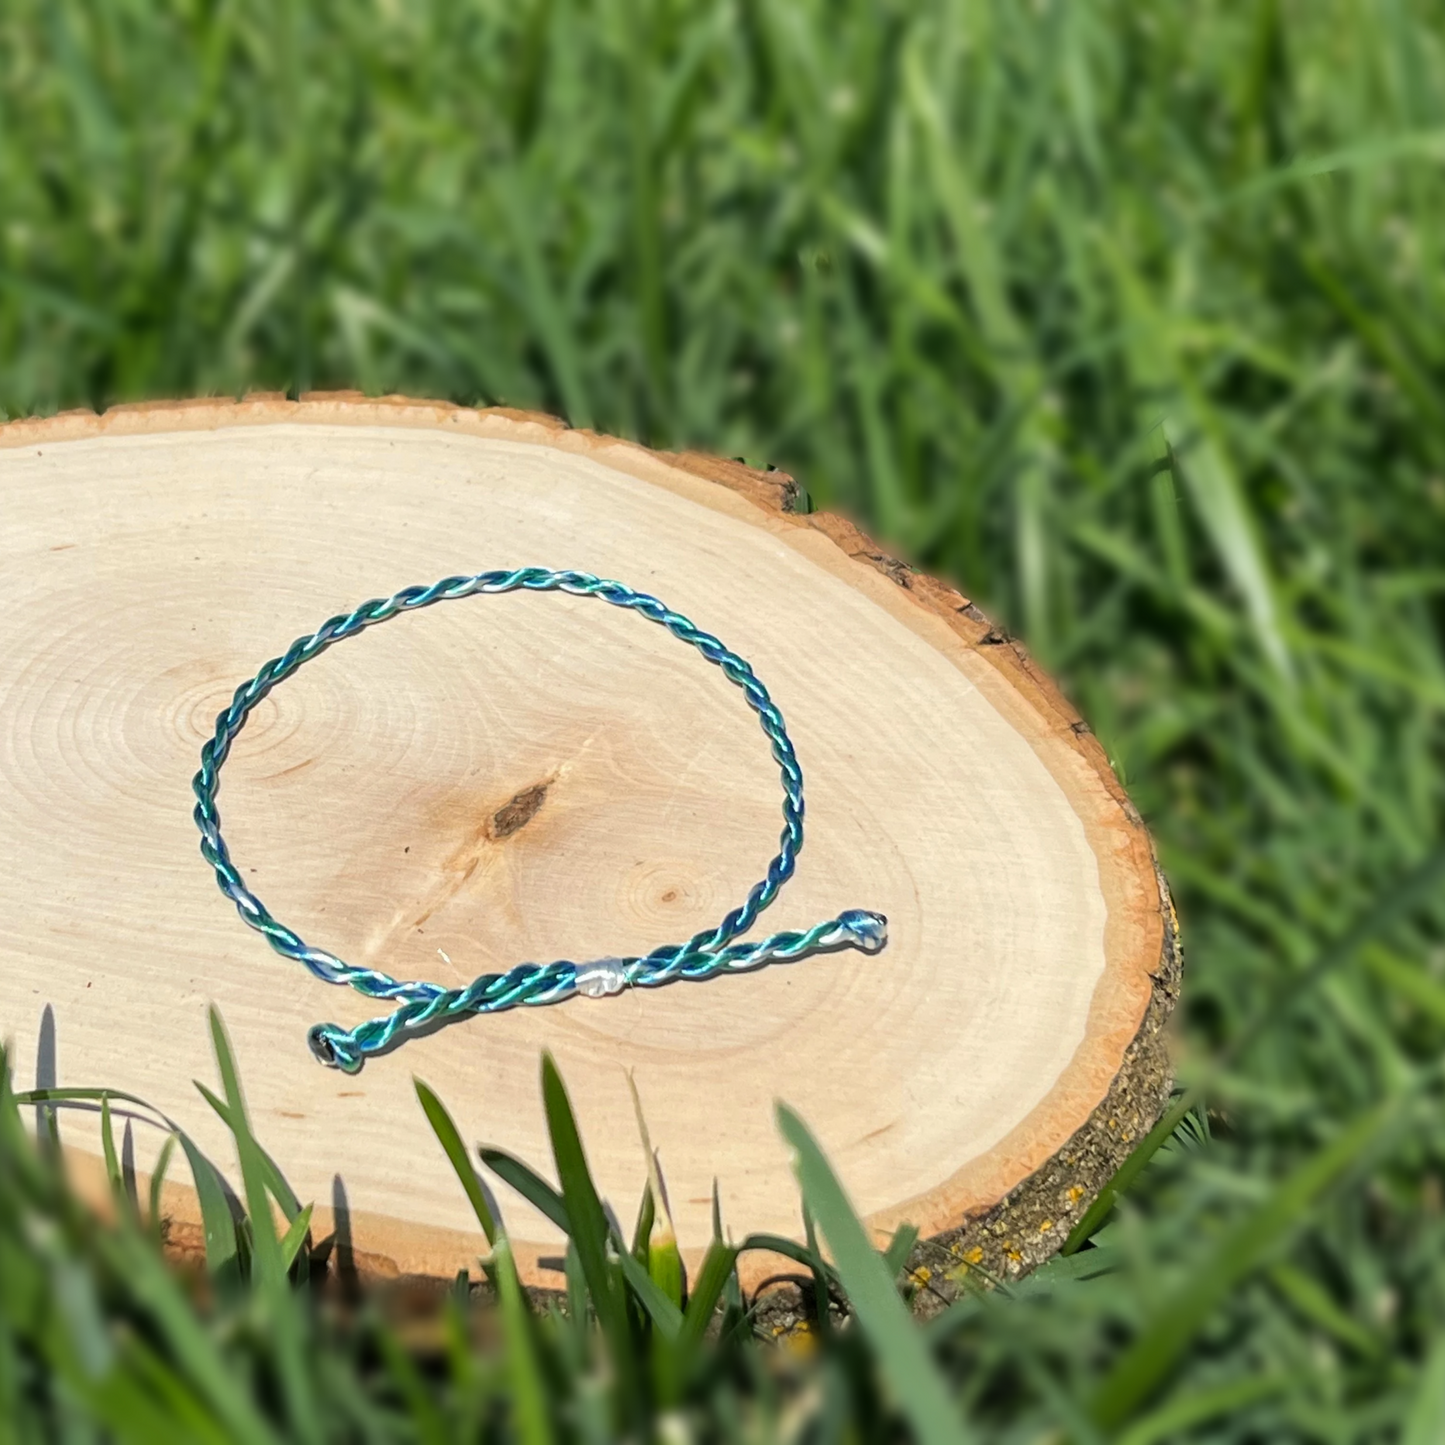 Earthful Eco Bracelet